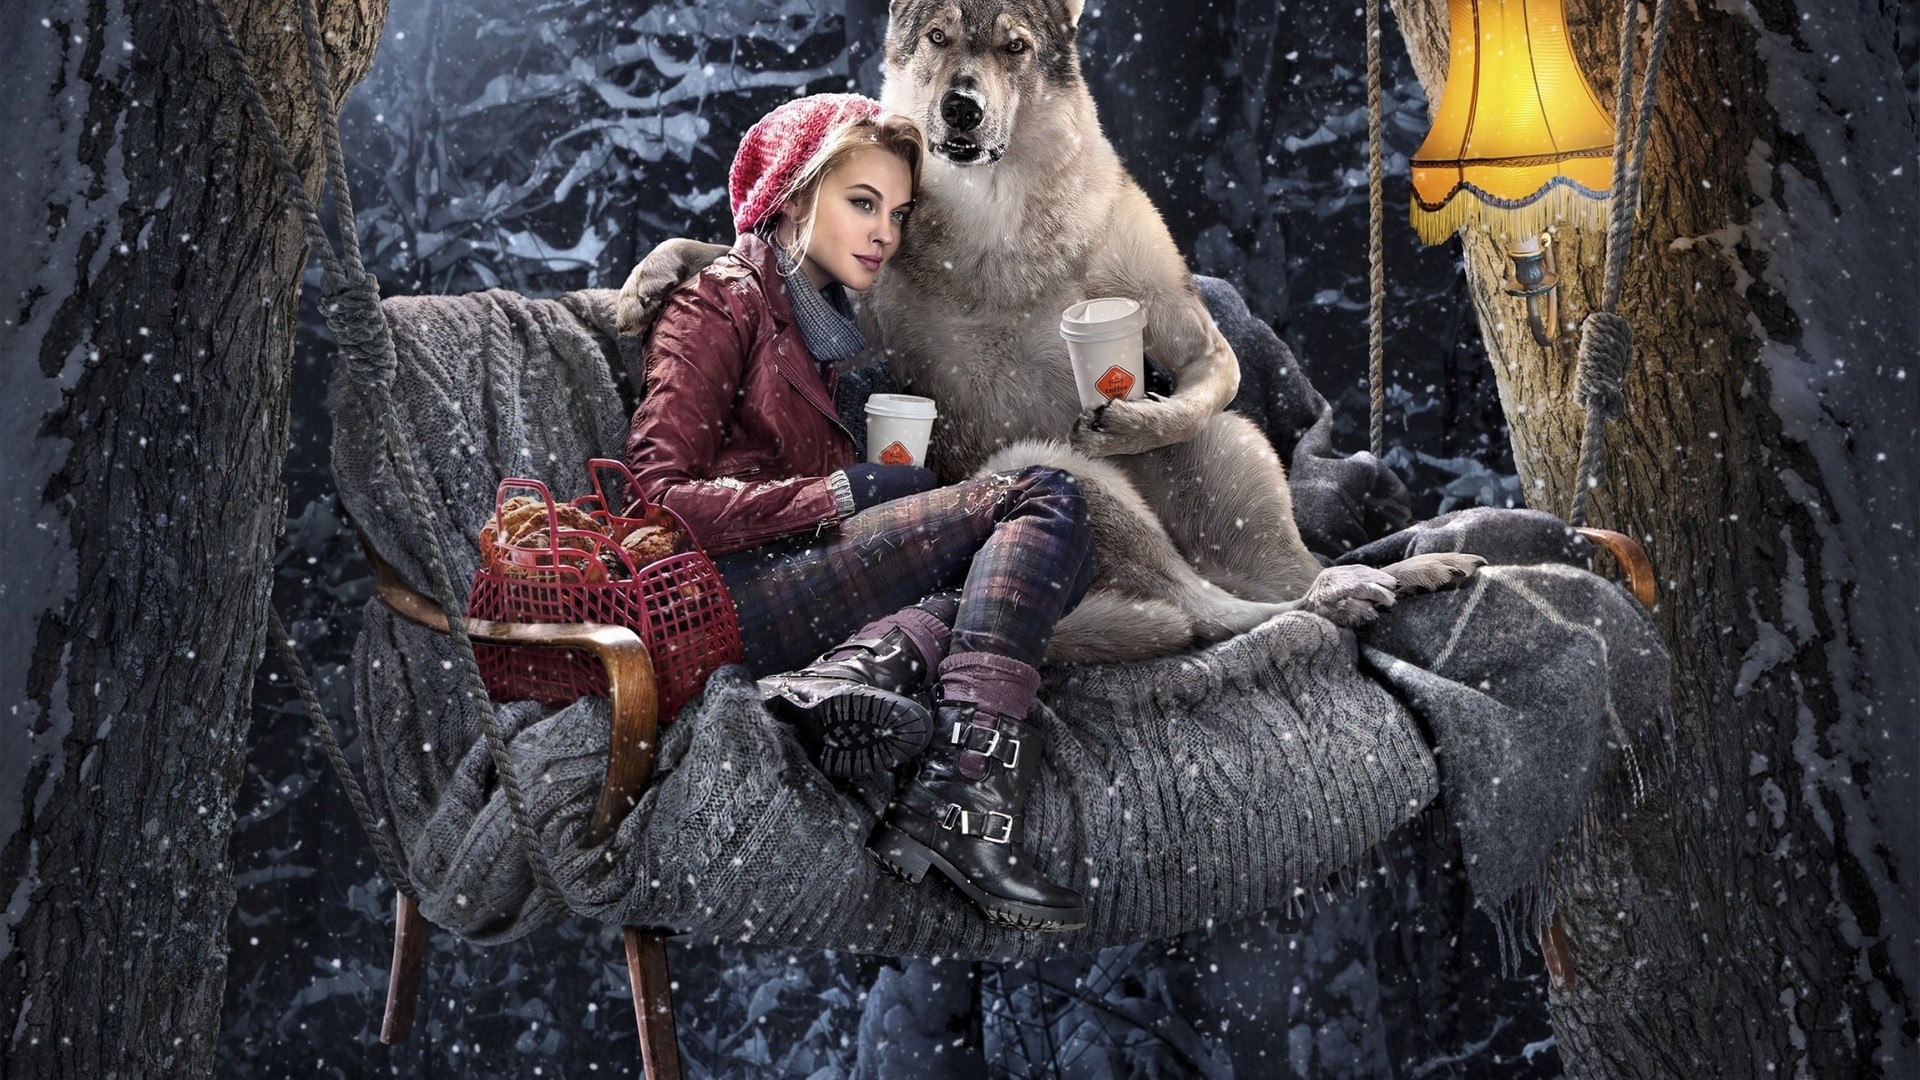 General 1920x1080 winter women model fantasy girl animals sitting hat snow boots lamp digital art